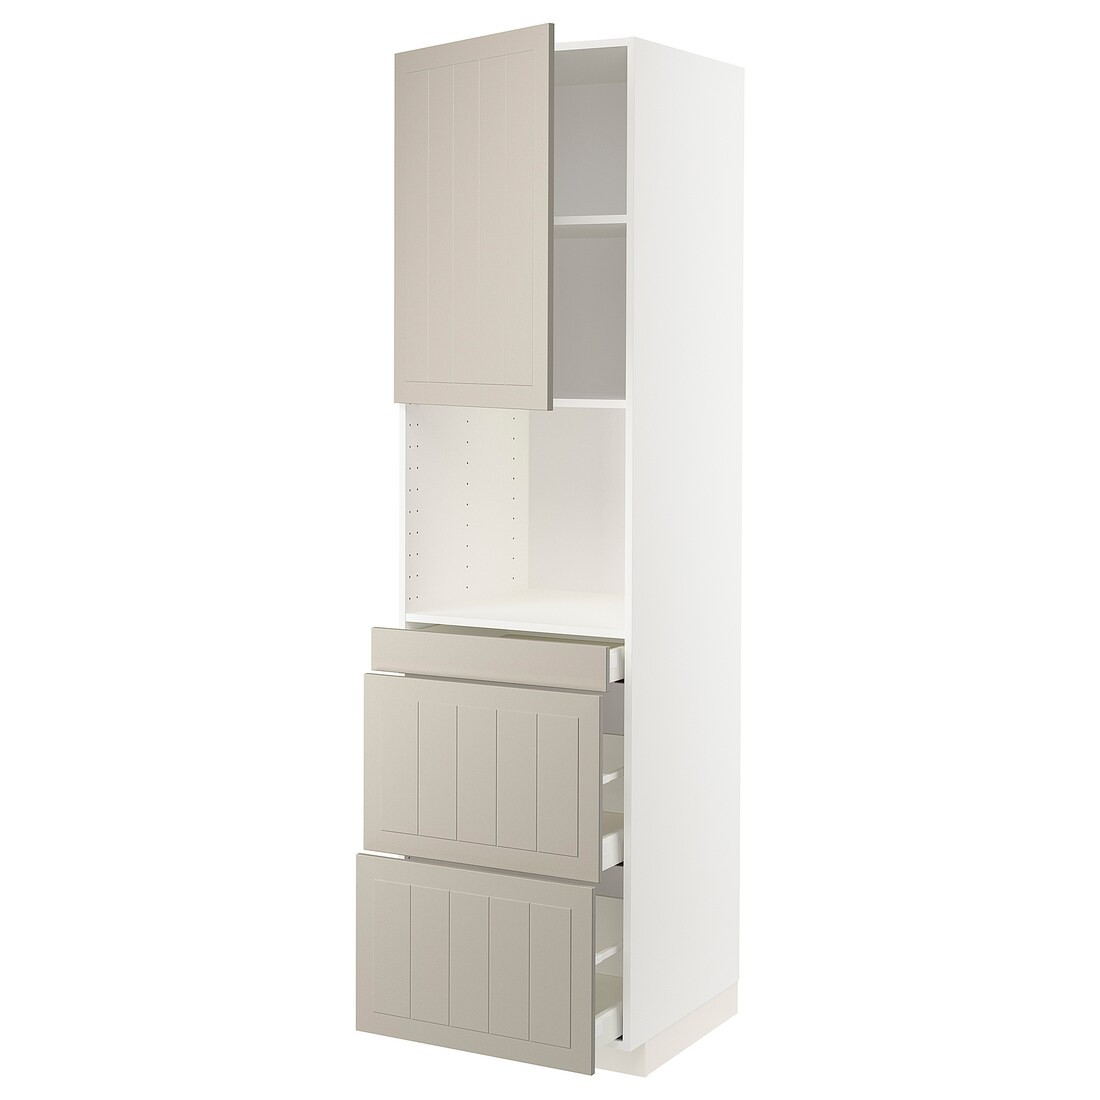 IKEA METOD МЕТОД / MAXIMERA МАКСИМЕРА Высокий шкаф для СВЧ / дверца / 3 ящика, белый / Stensund бежевый, 60x60x220 см 59468350 | 594.683.50